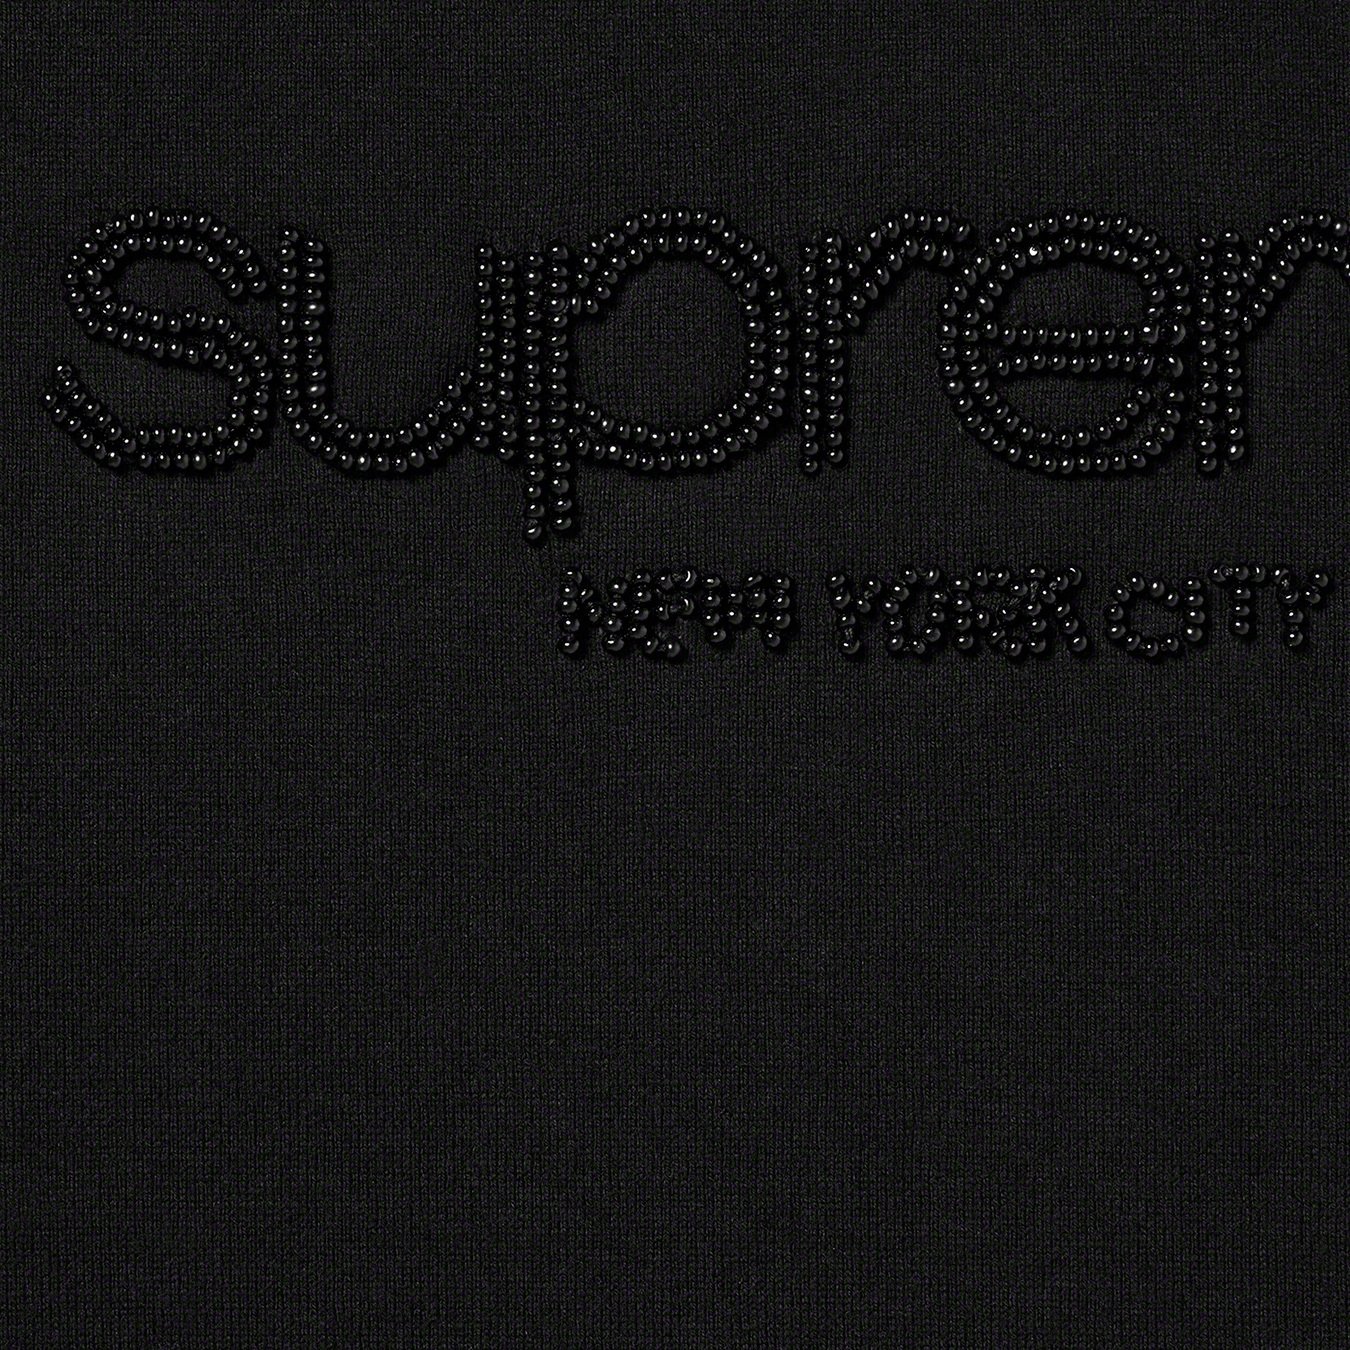 Beaded Logo S S Top - spring summer 2022 - Supreme